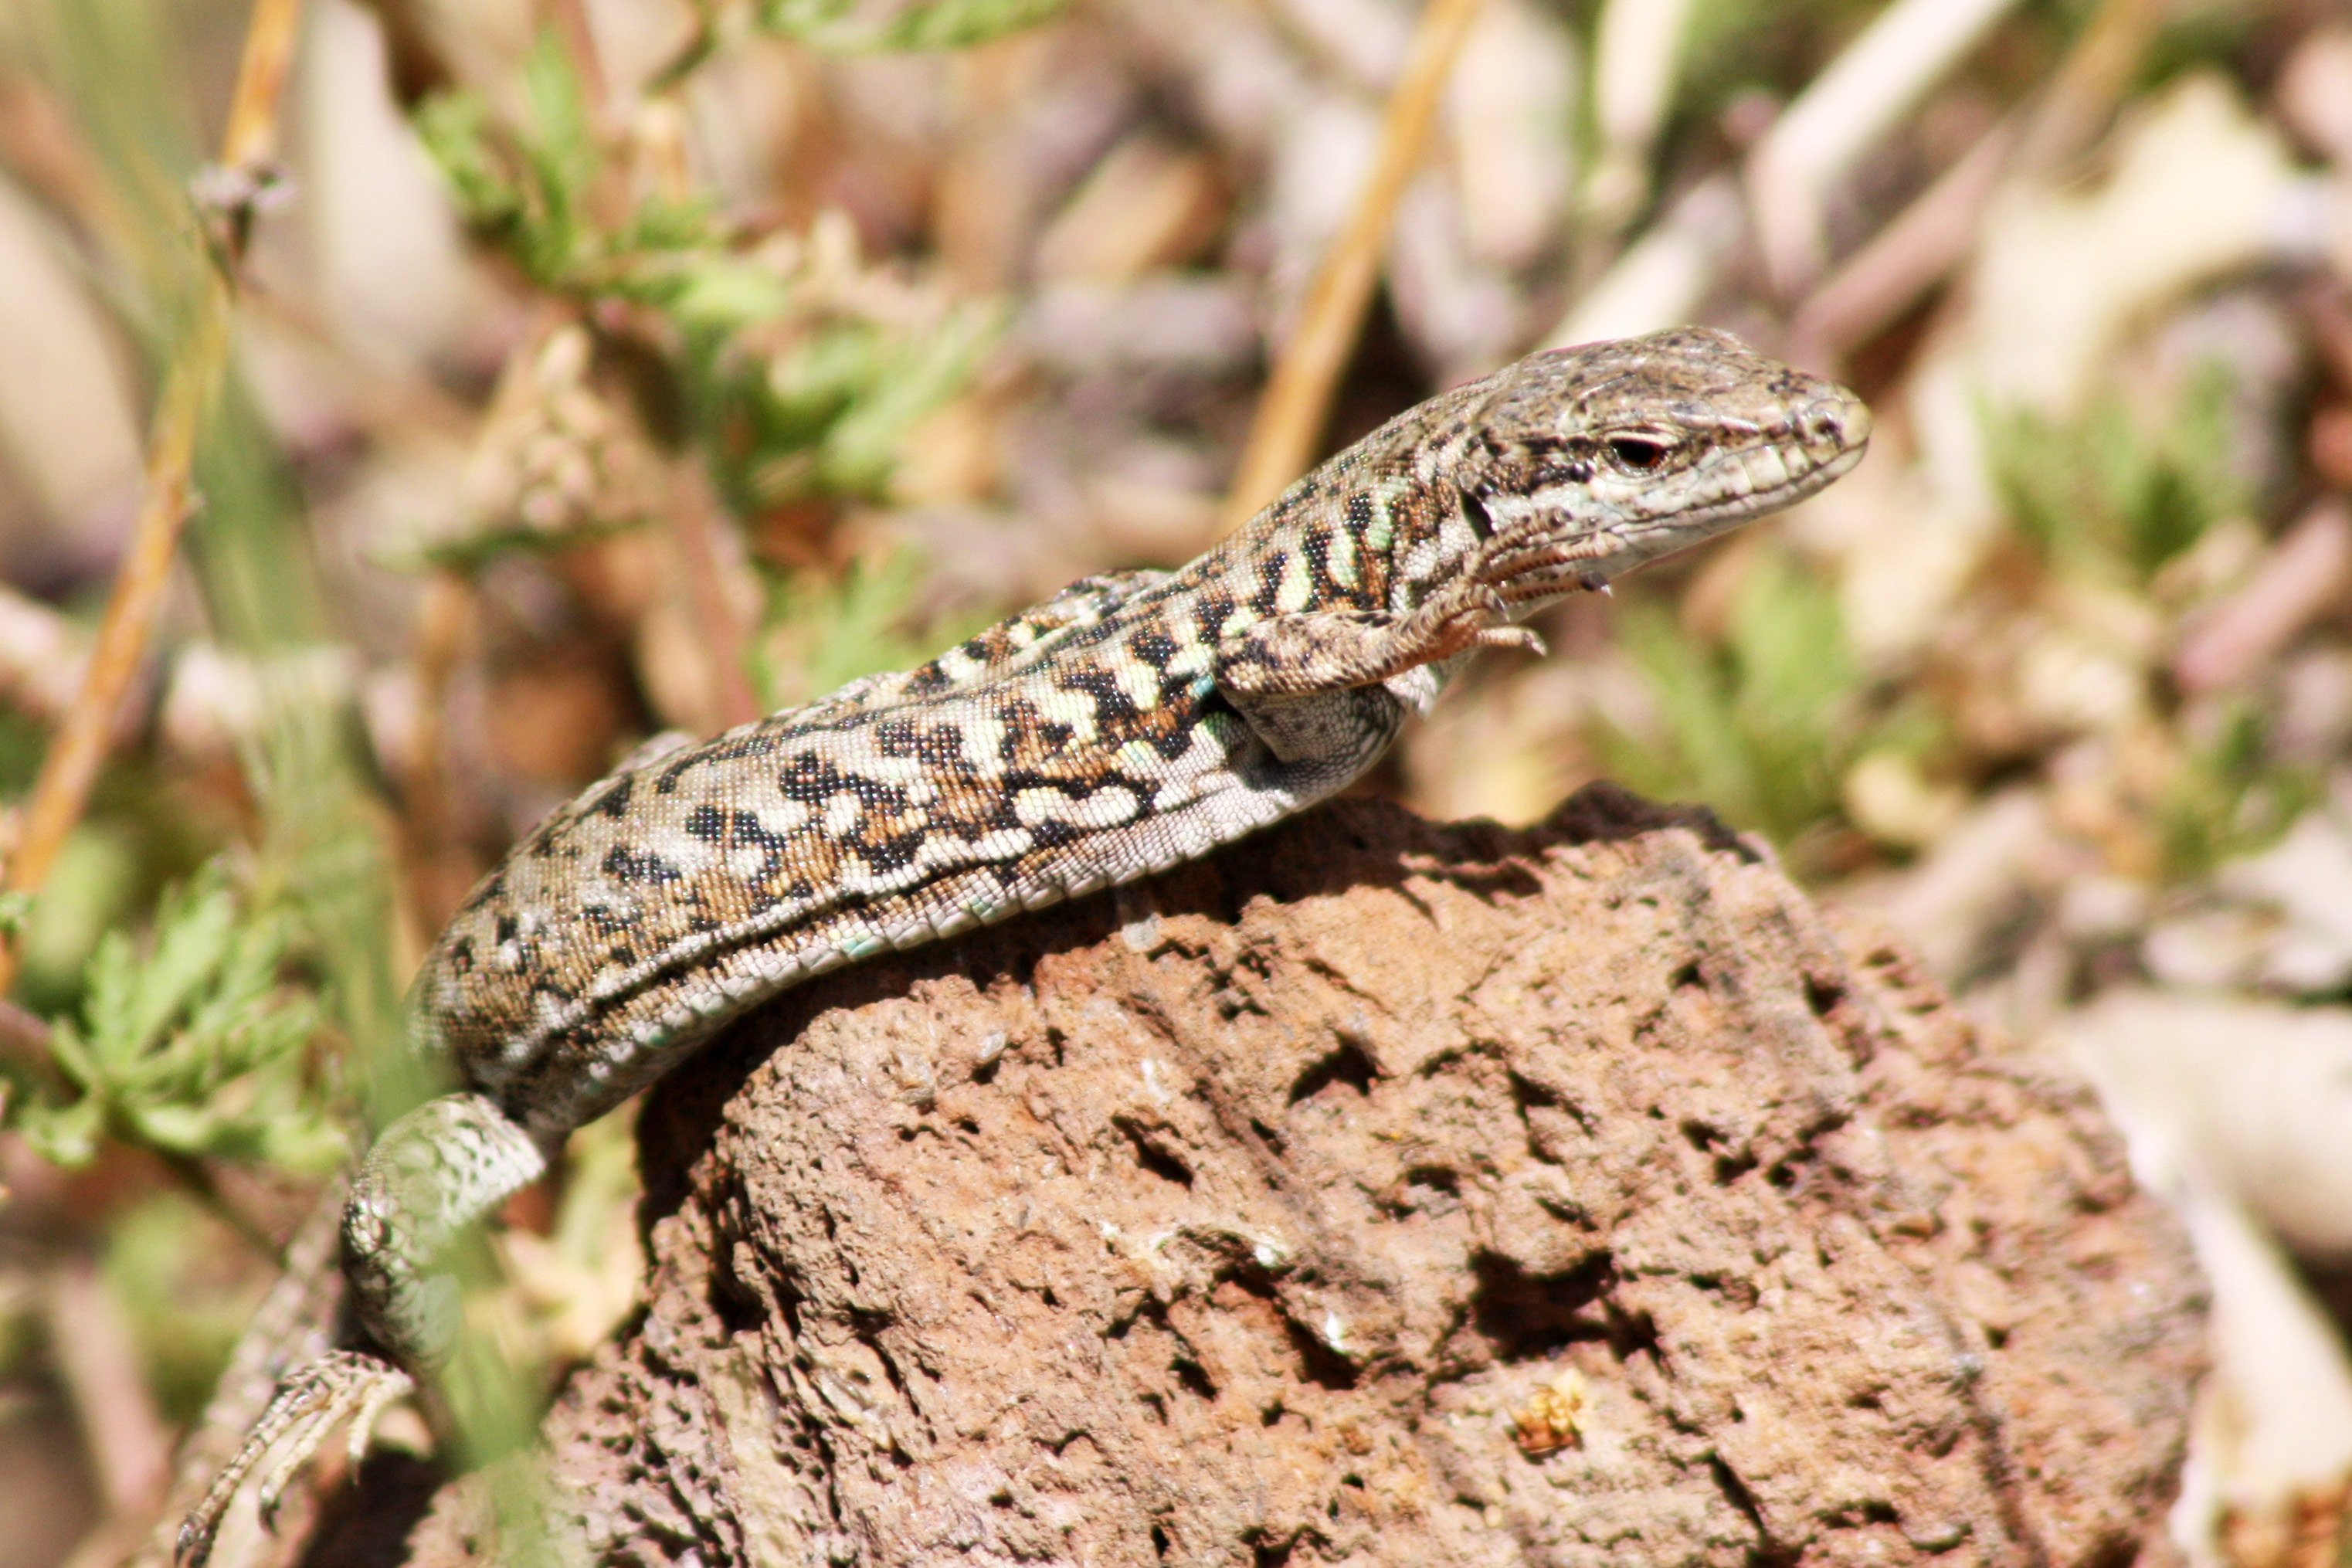 File:Italian wall lizard (Podarcis sicula).jpg - Wikimedia Commons